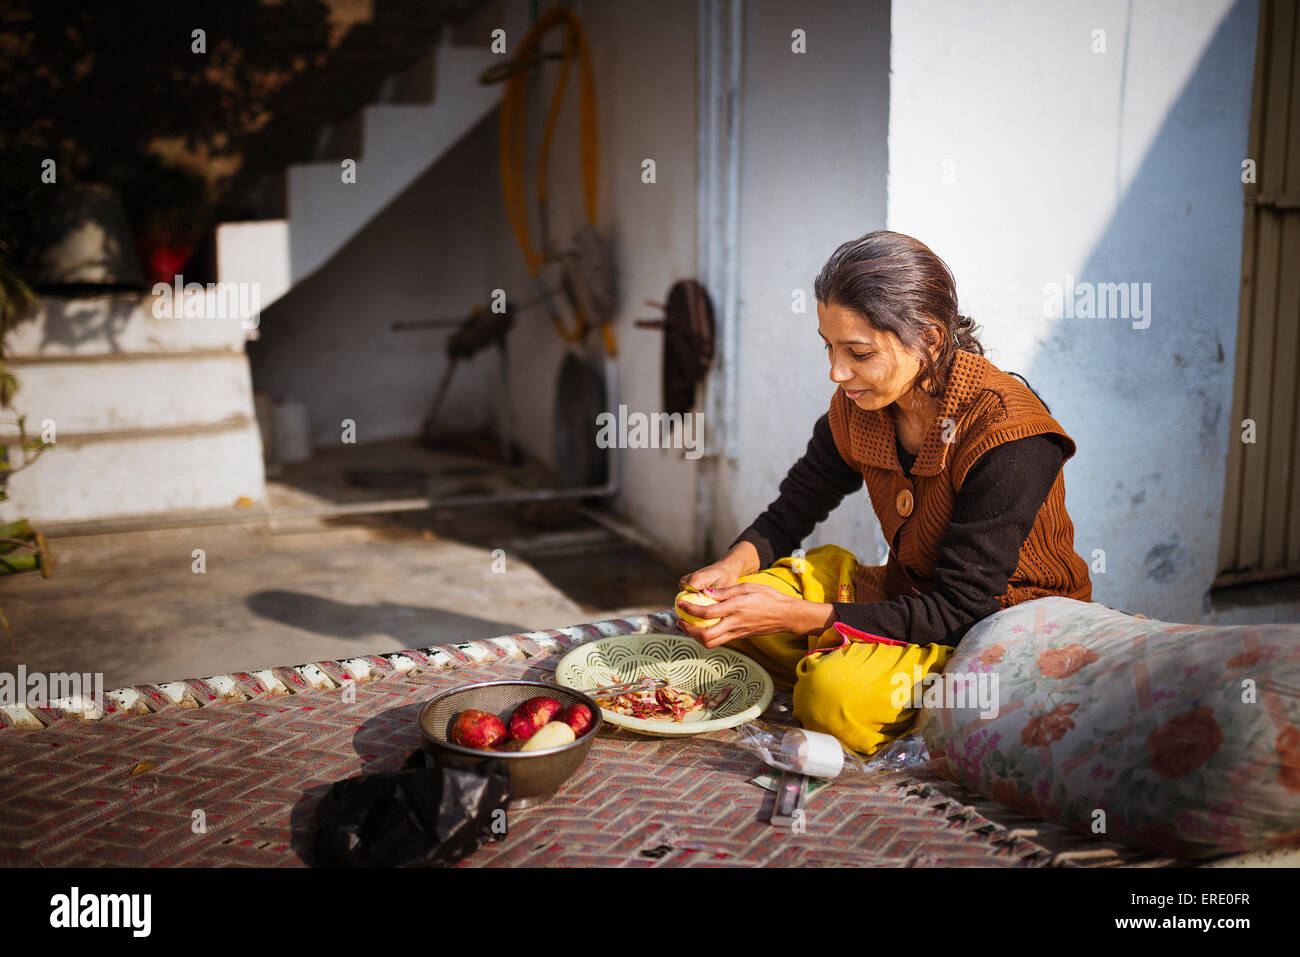 Woman preparing food outdoors Stock Photo